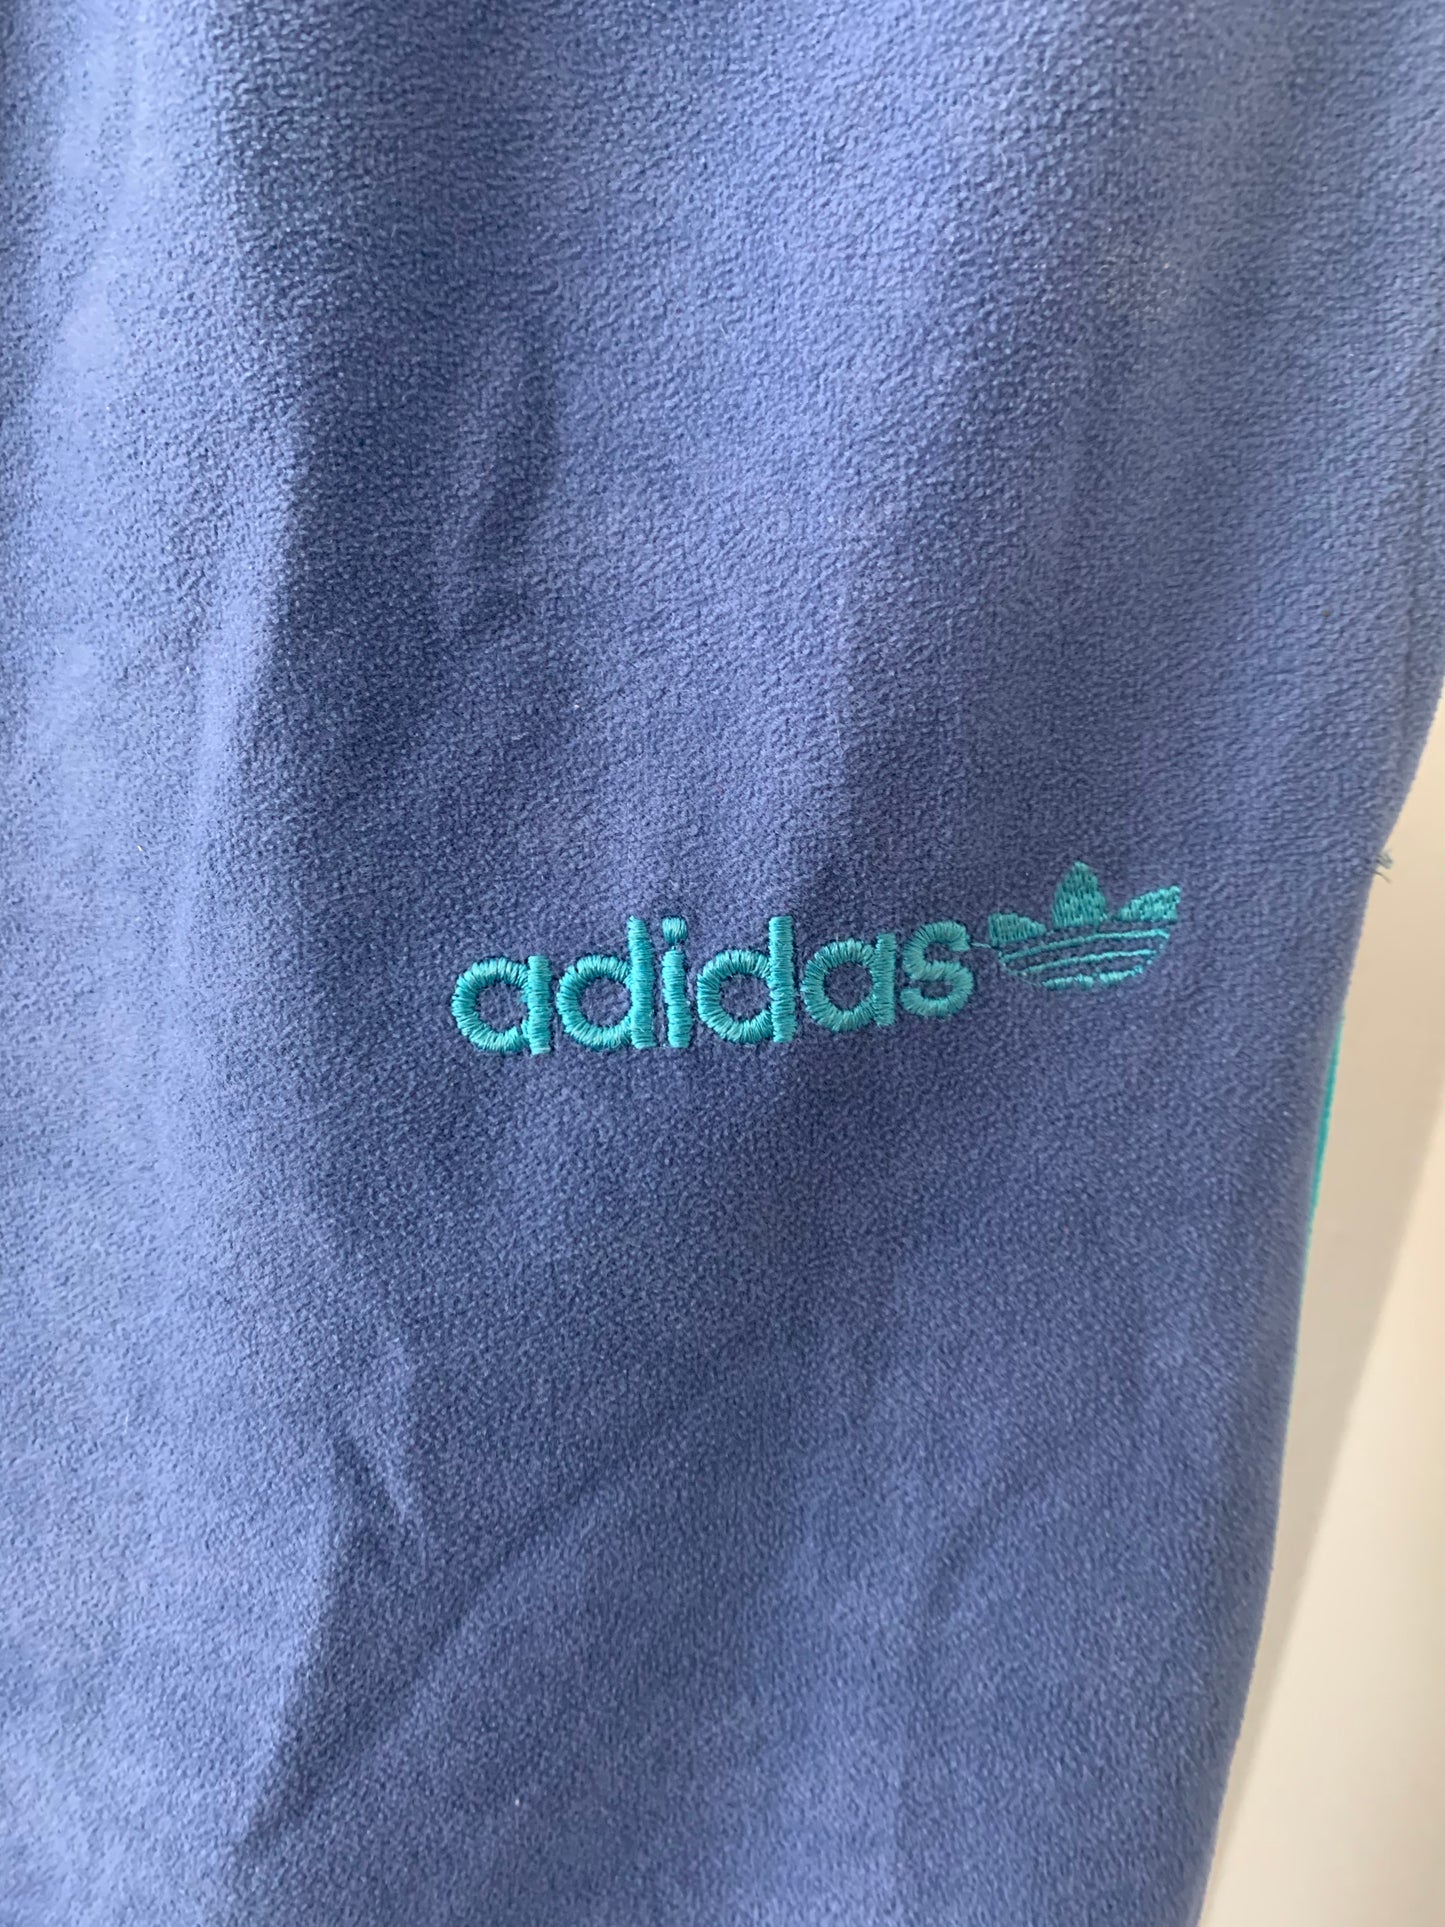 Adidas Retro Sweat Pants